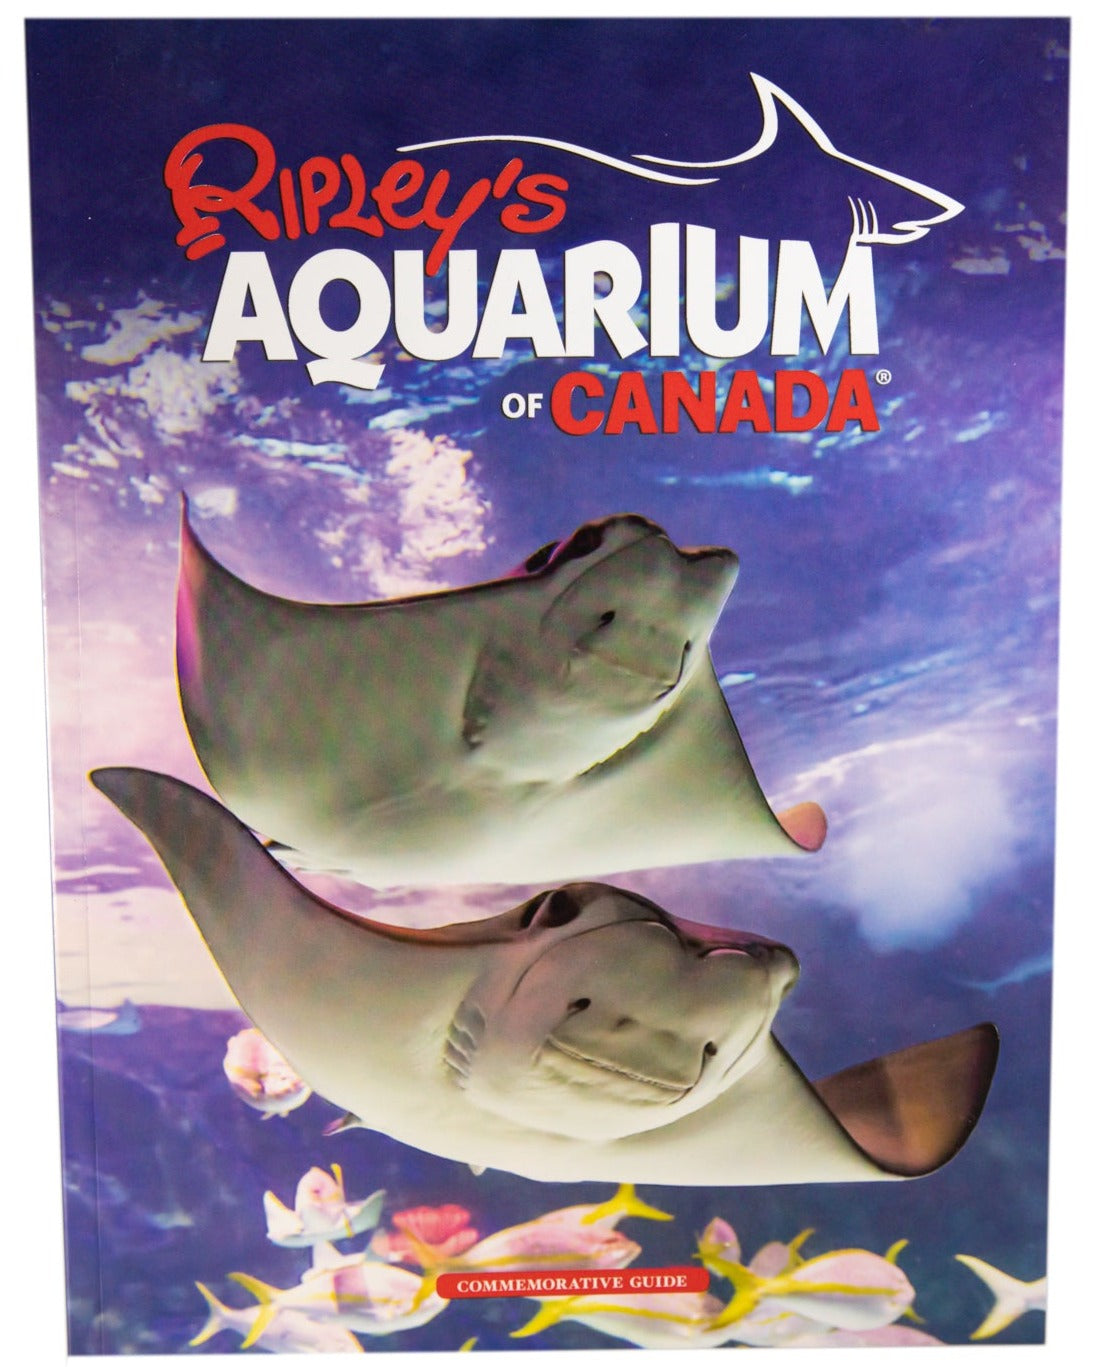 Ripley's Aquarium of Canada Commemorative Guide